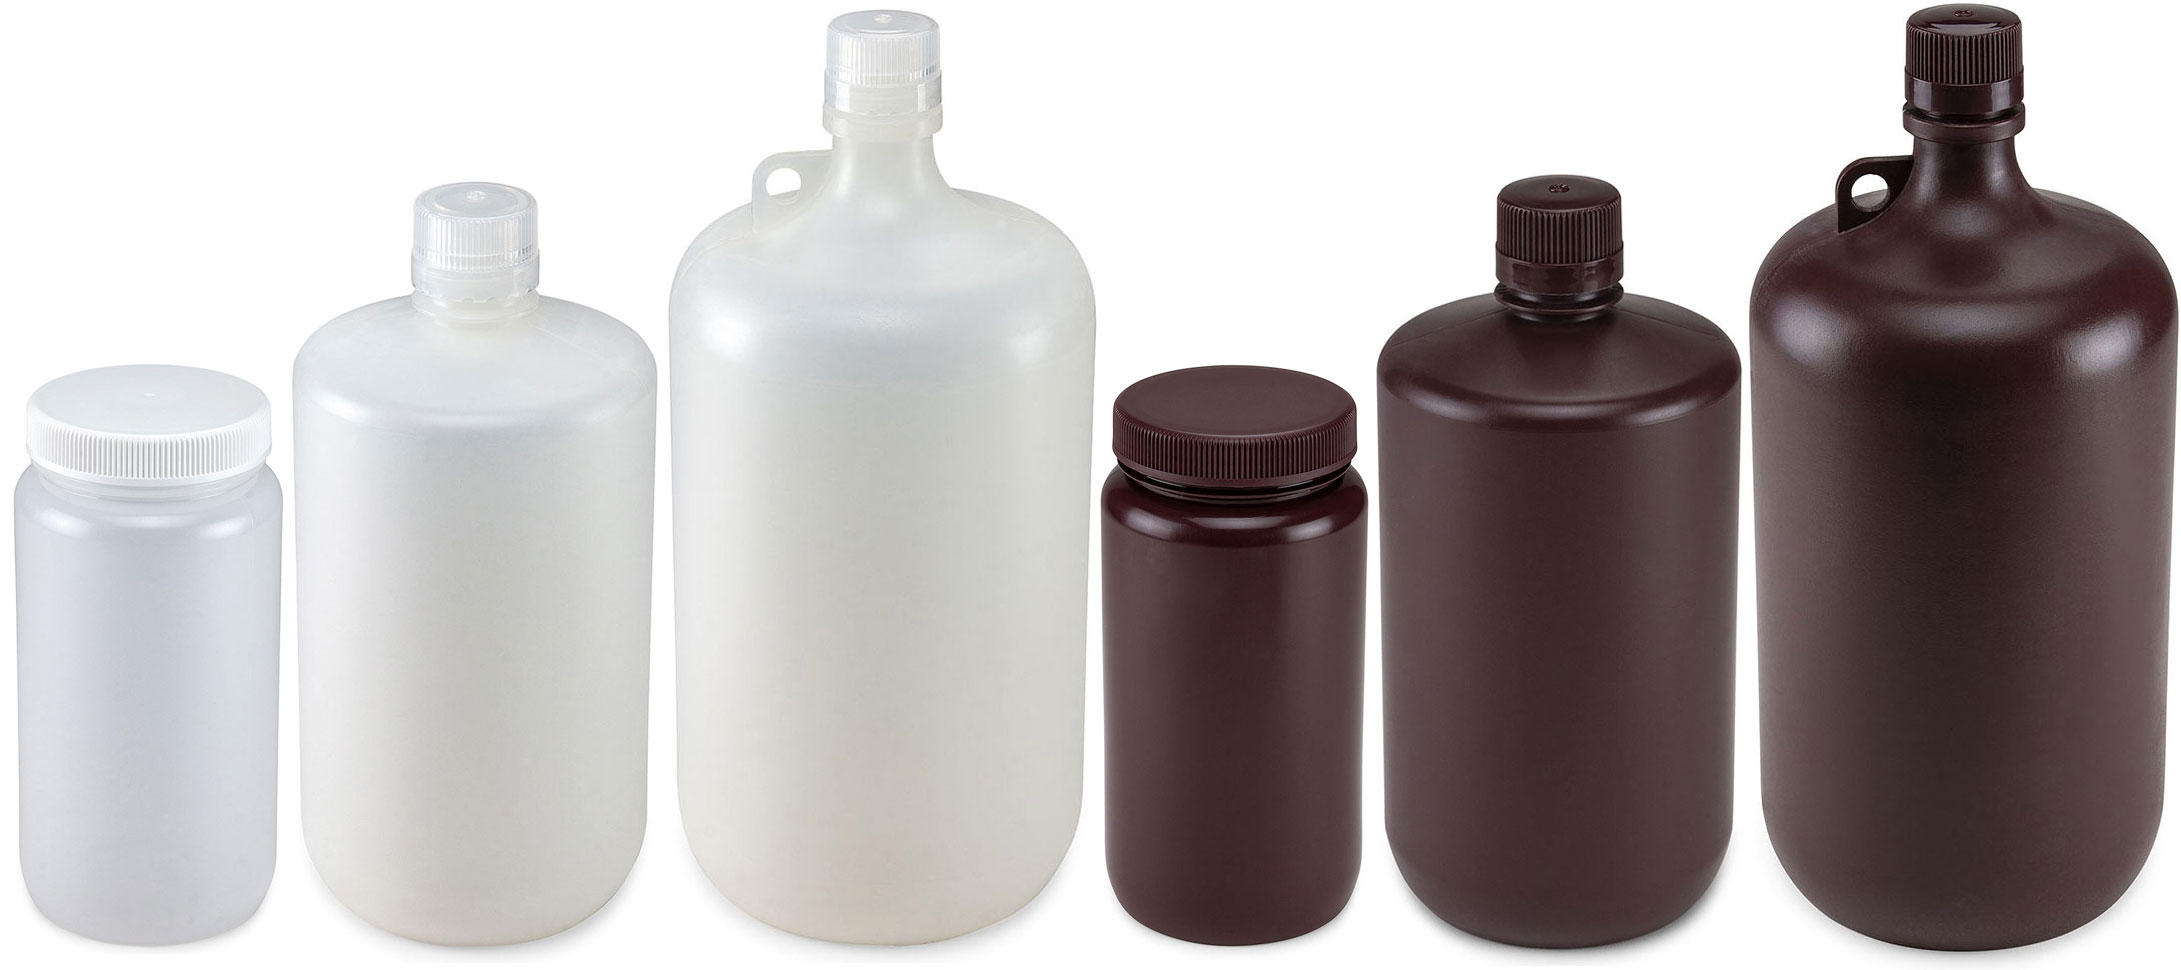 Large Format Plastic Laboratory Bottles